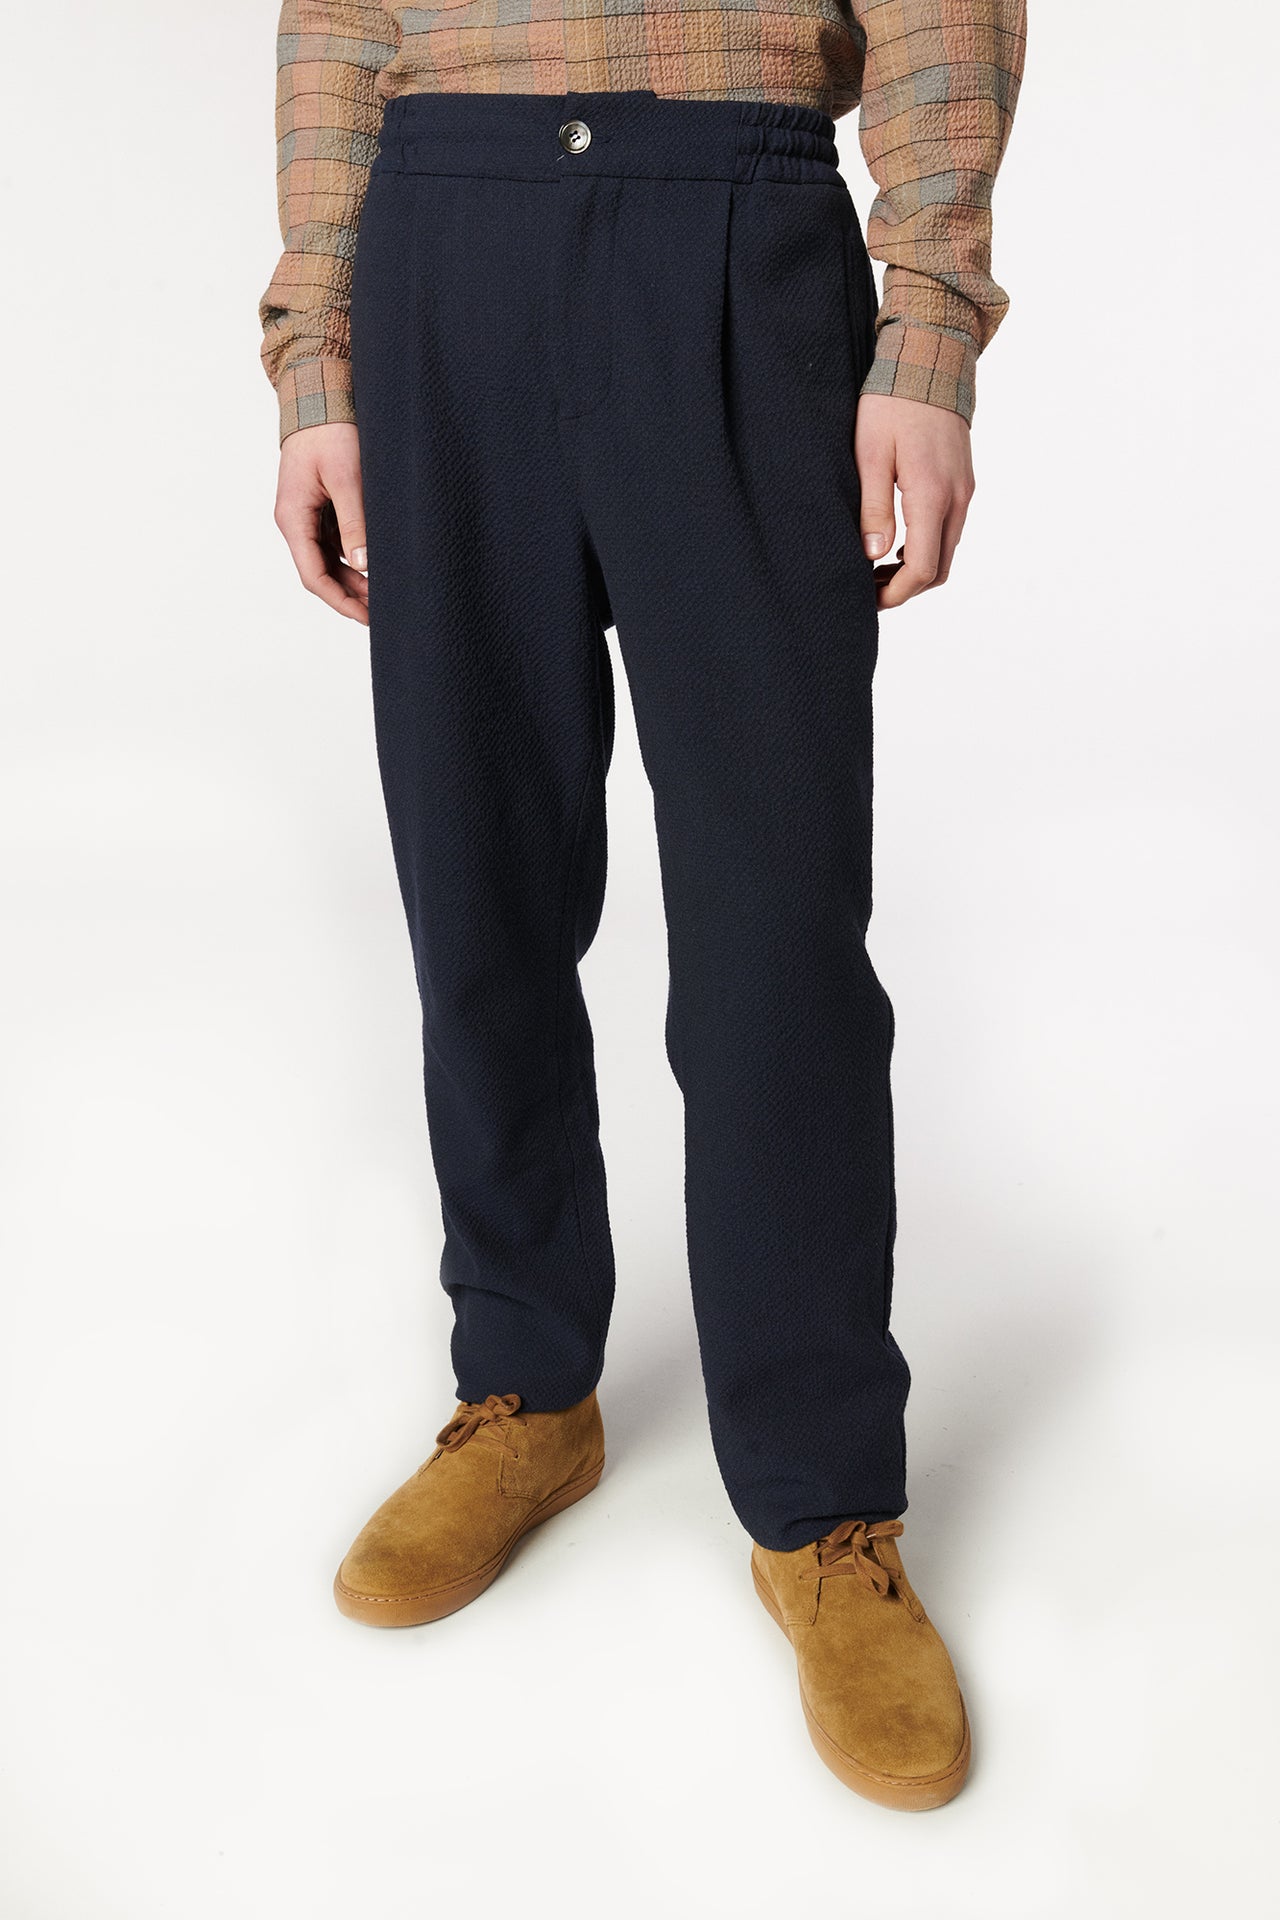 New Garden Trousers in a Navy Blue  Italian Virgin Wool and Cotton Seersucker by Subalpino